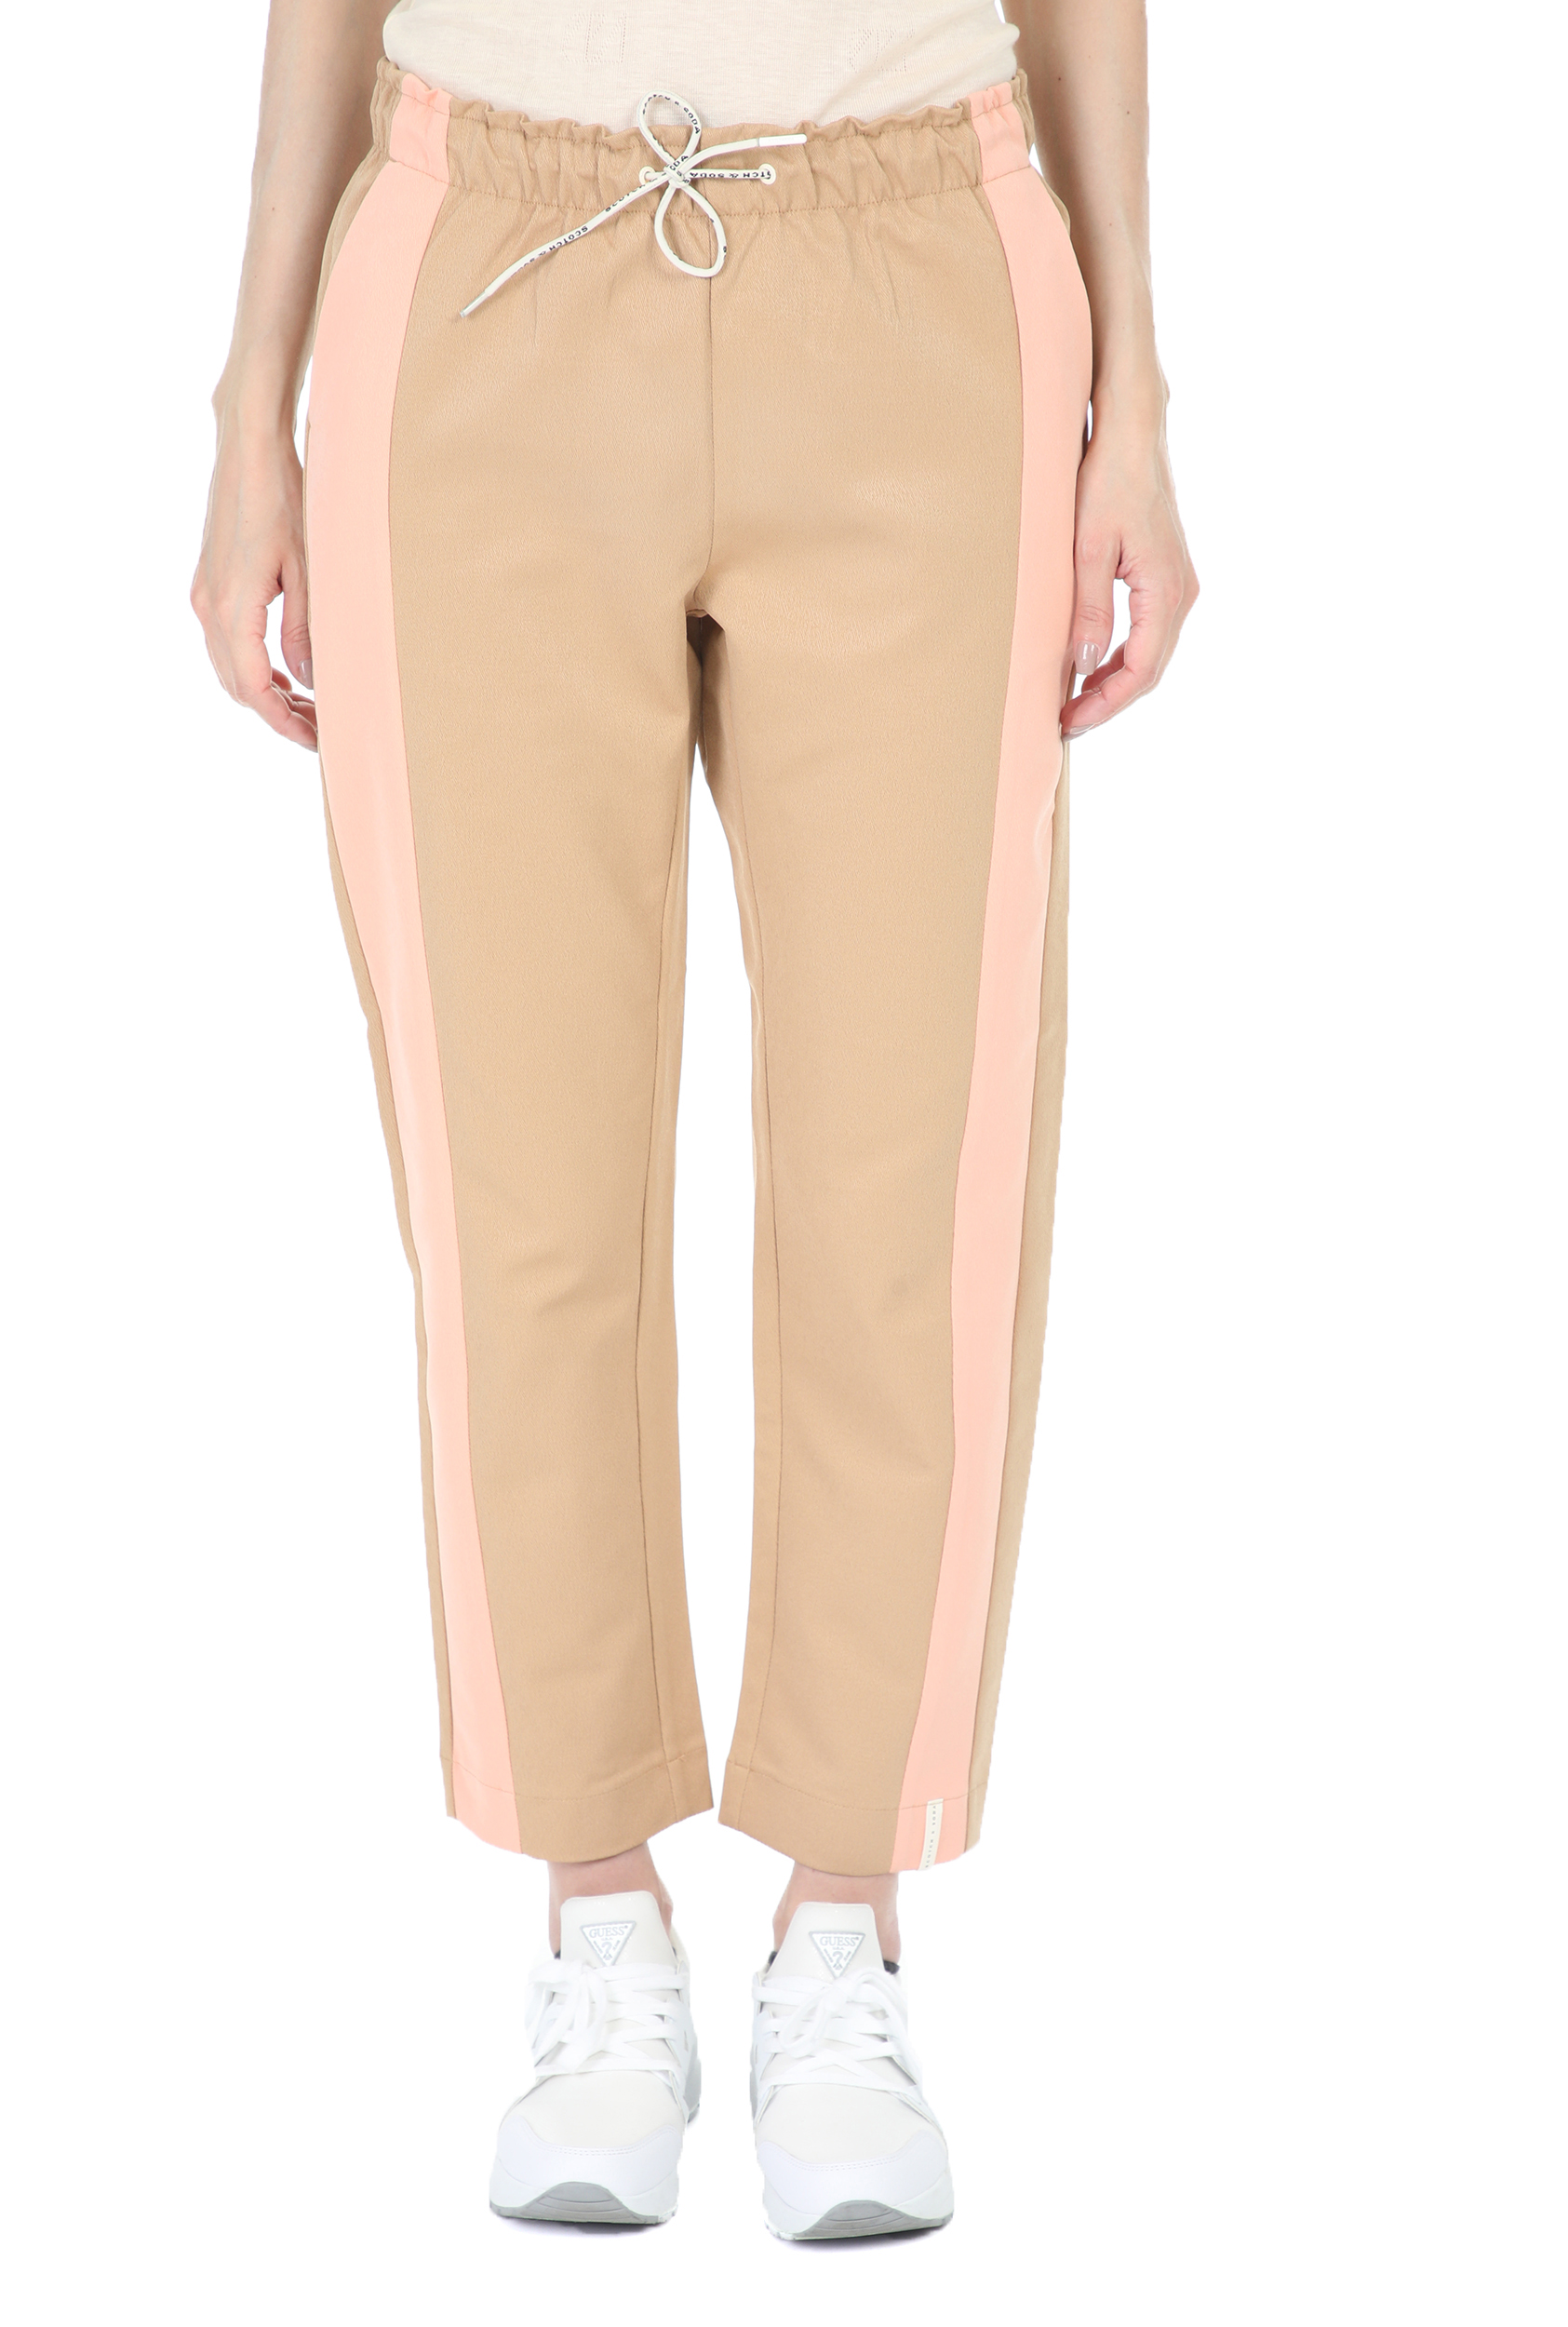 SCOTCH & SODA – Γυναικείο παντελόνι SCOTCH & SODA Club nomade tapered μπεζ ροζ 1795416.0-0101